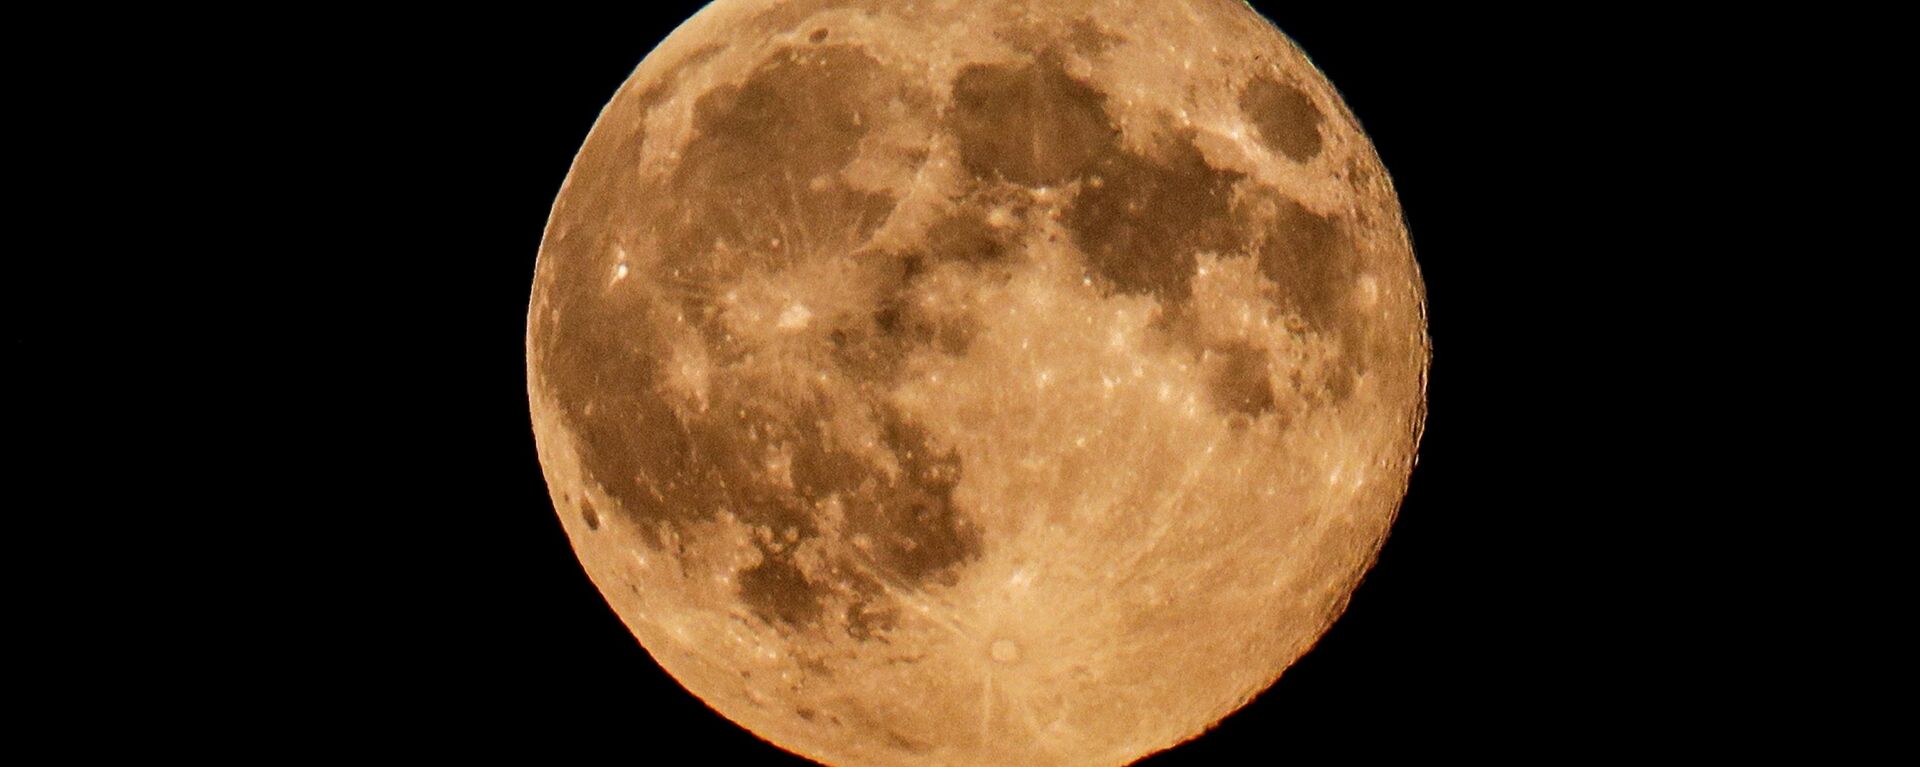 La Luna (imagen referencial) - Sputnik Mundo, 1920, 02.02.2021